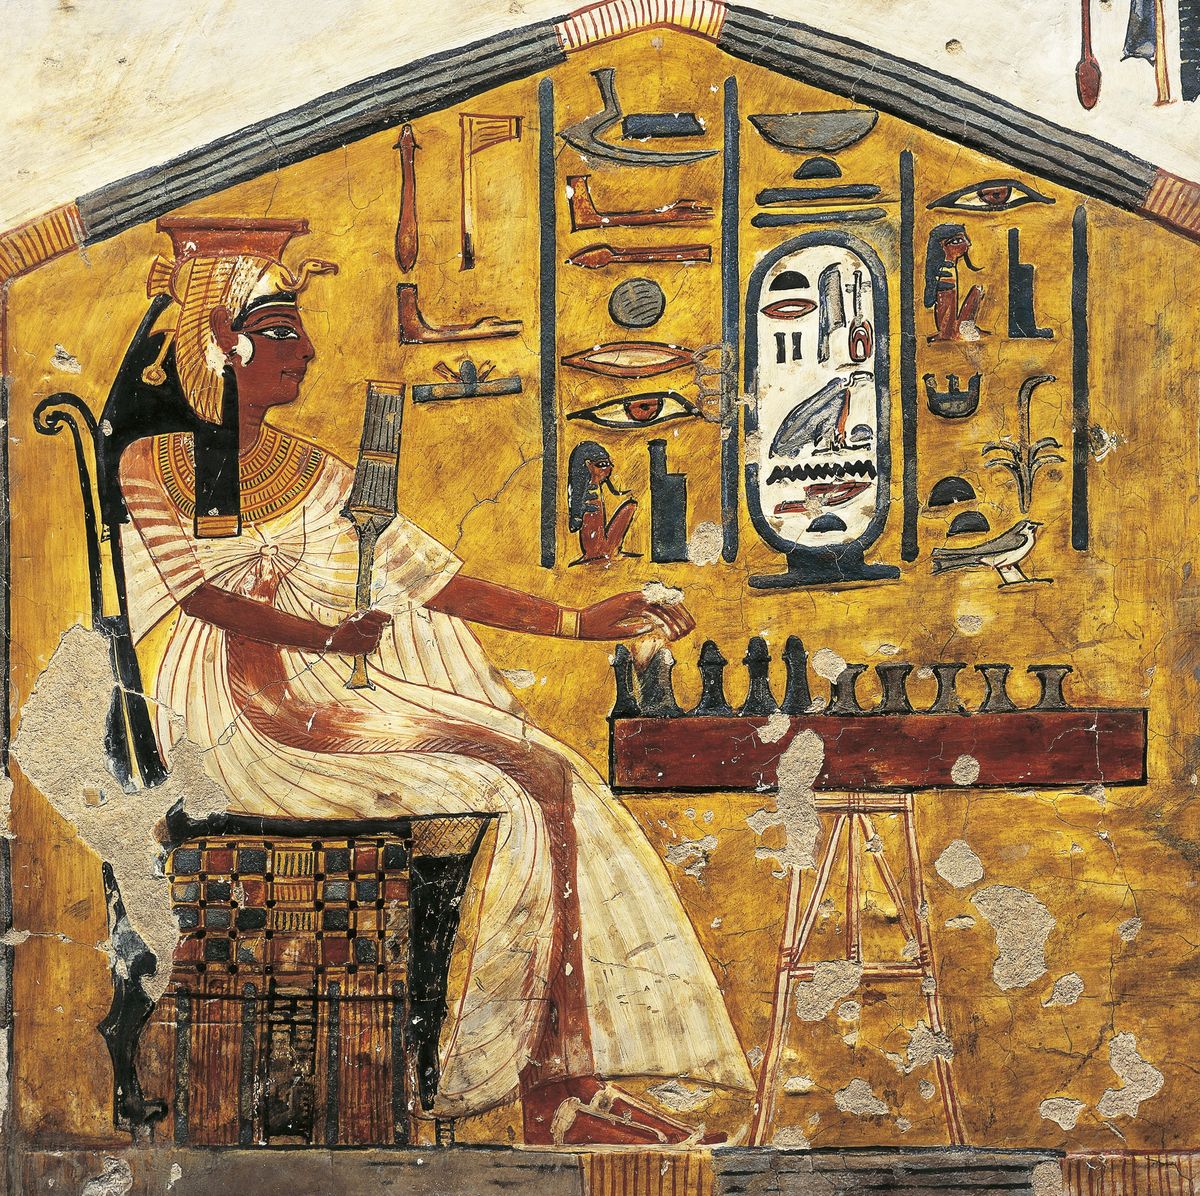 Egypt, Thebes, Luxor, Valley of Queens, Tomb of Nefertari, detail of antechamber frescoes, Queen Nefertari playing Senet